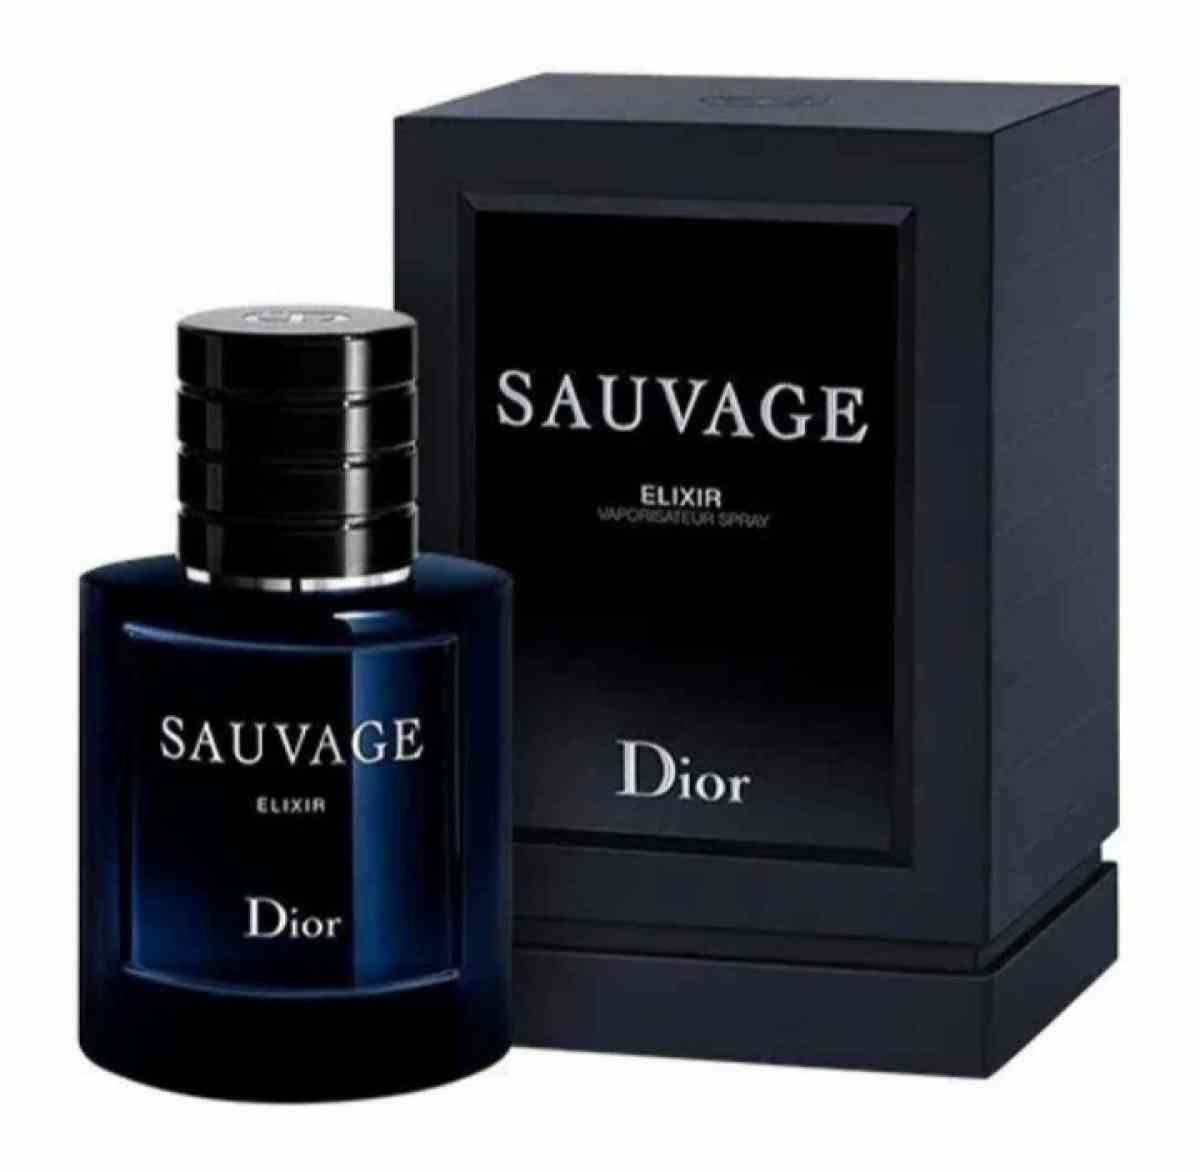 New (Sealed) Dior Sauvage Elixir Vaporized Spray  2.0 0z